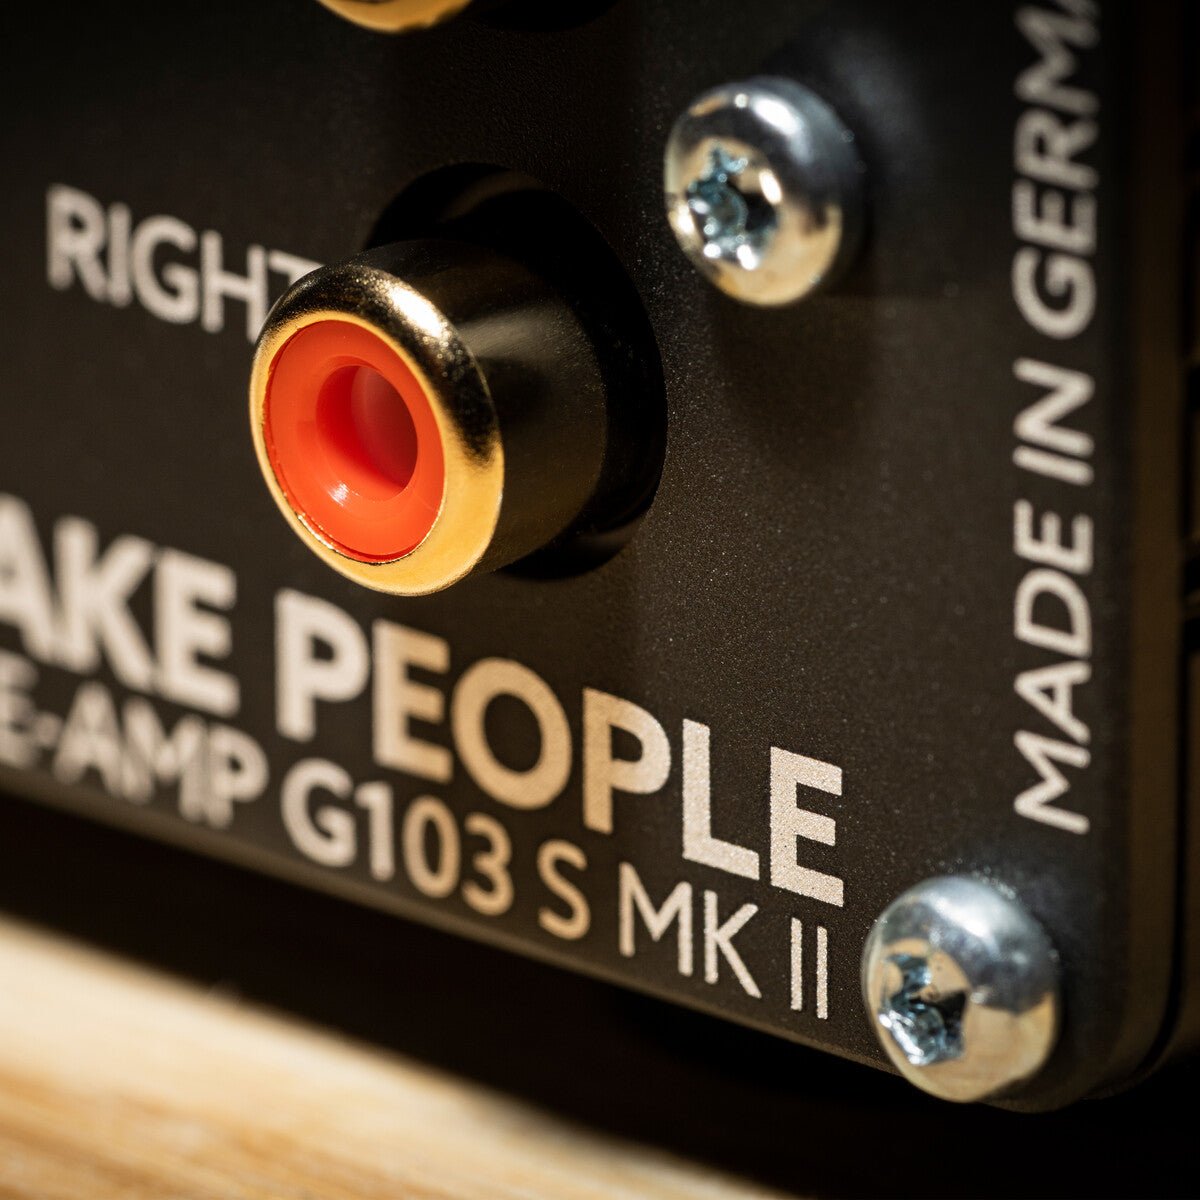 Lake People G103-S MKII - Cool Kids Audio